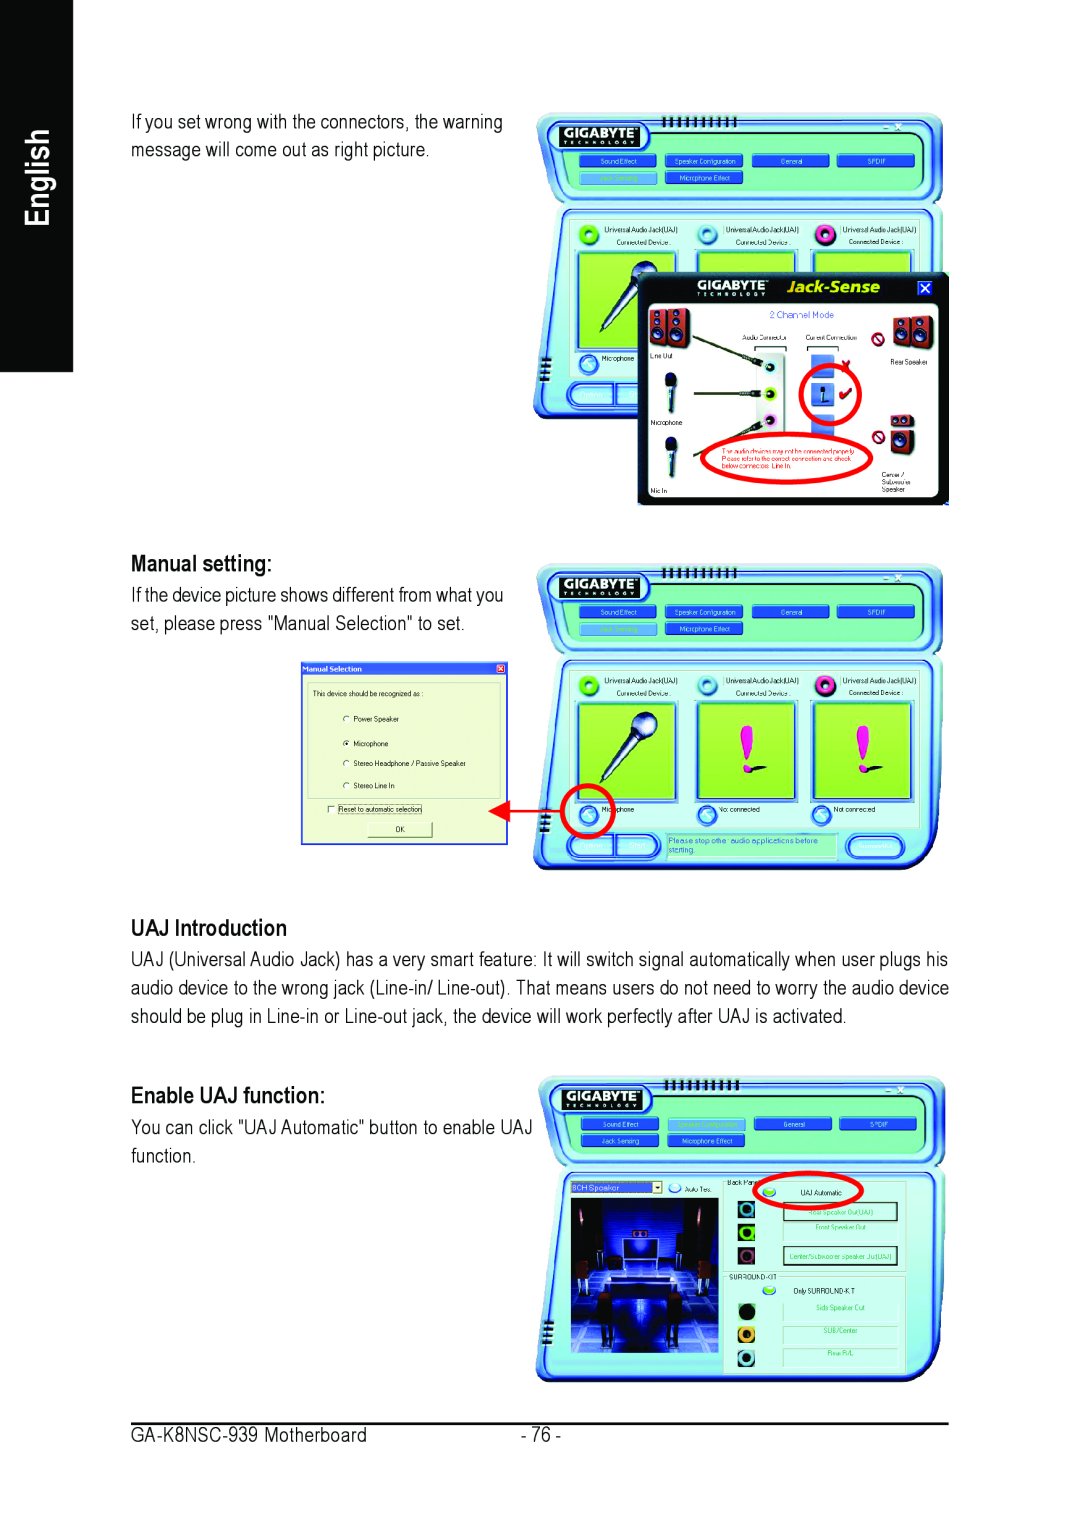 AMD GA-K8NSC-939 user manual Manual setting, UAJ Introduction, Enable UAJ function, English 